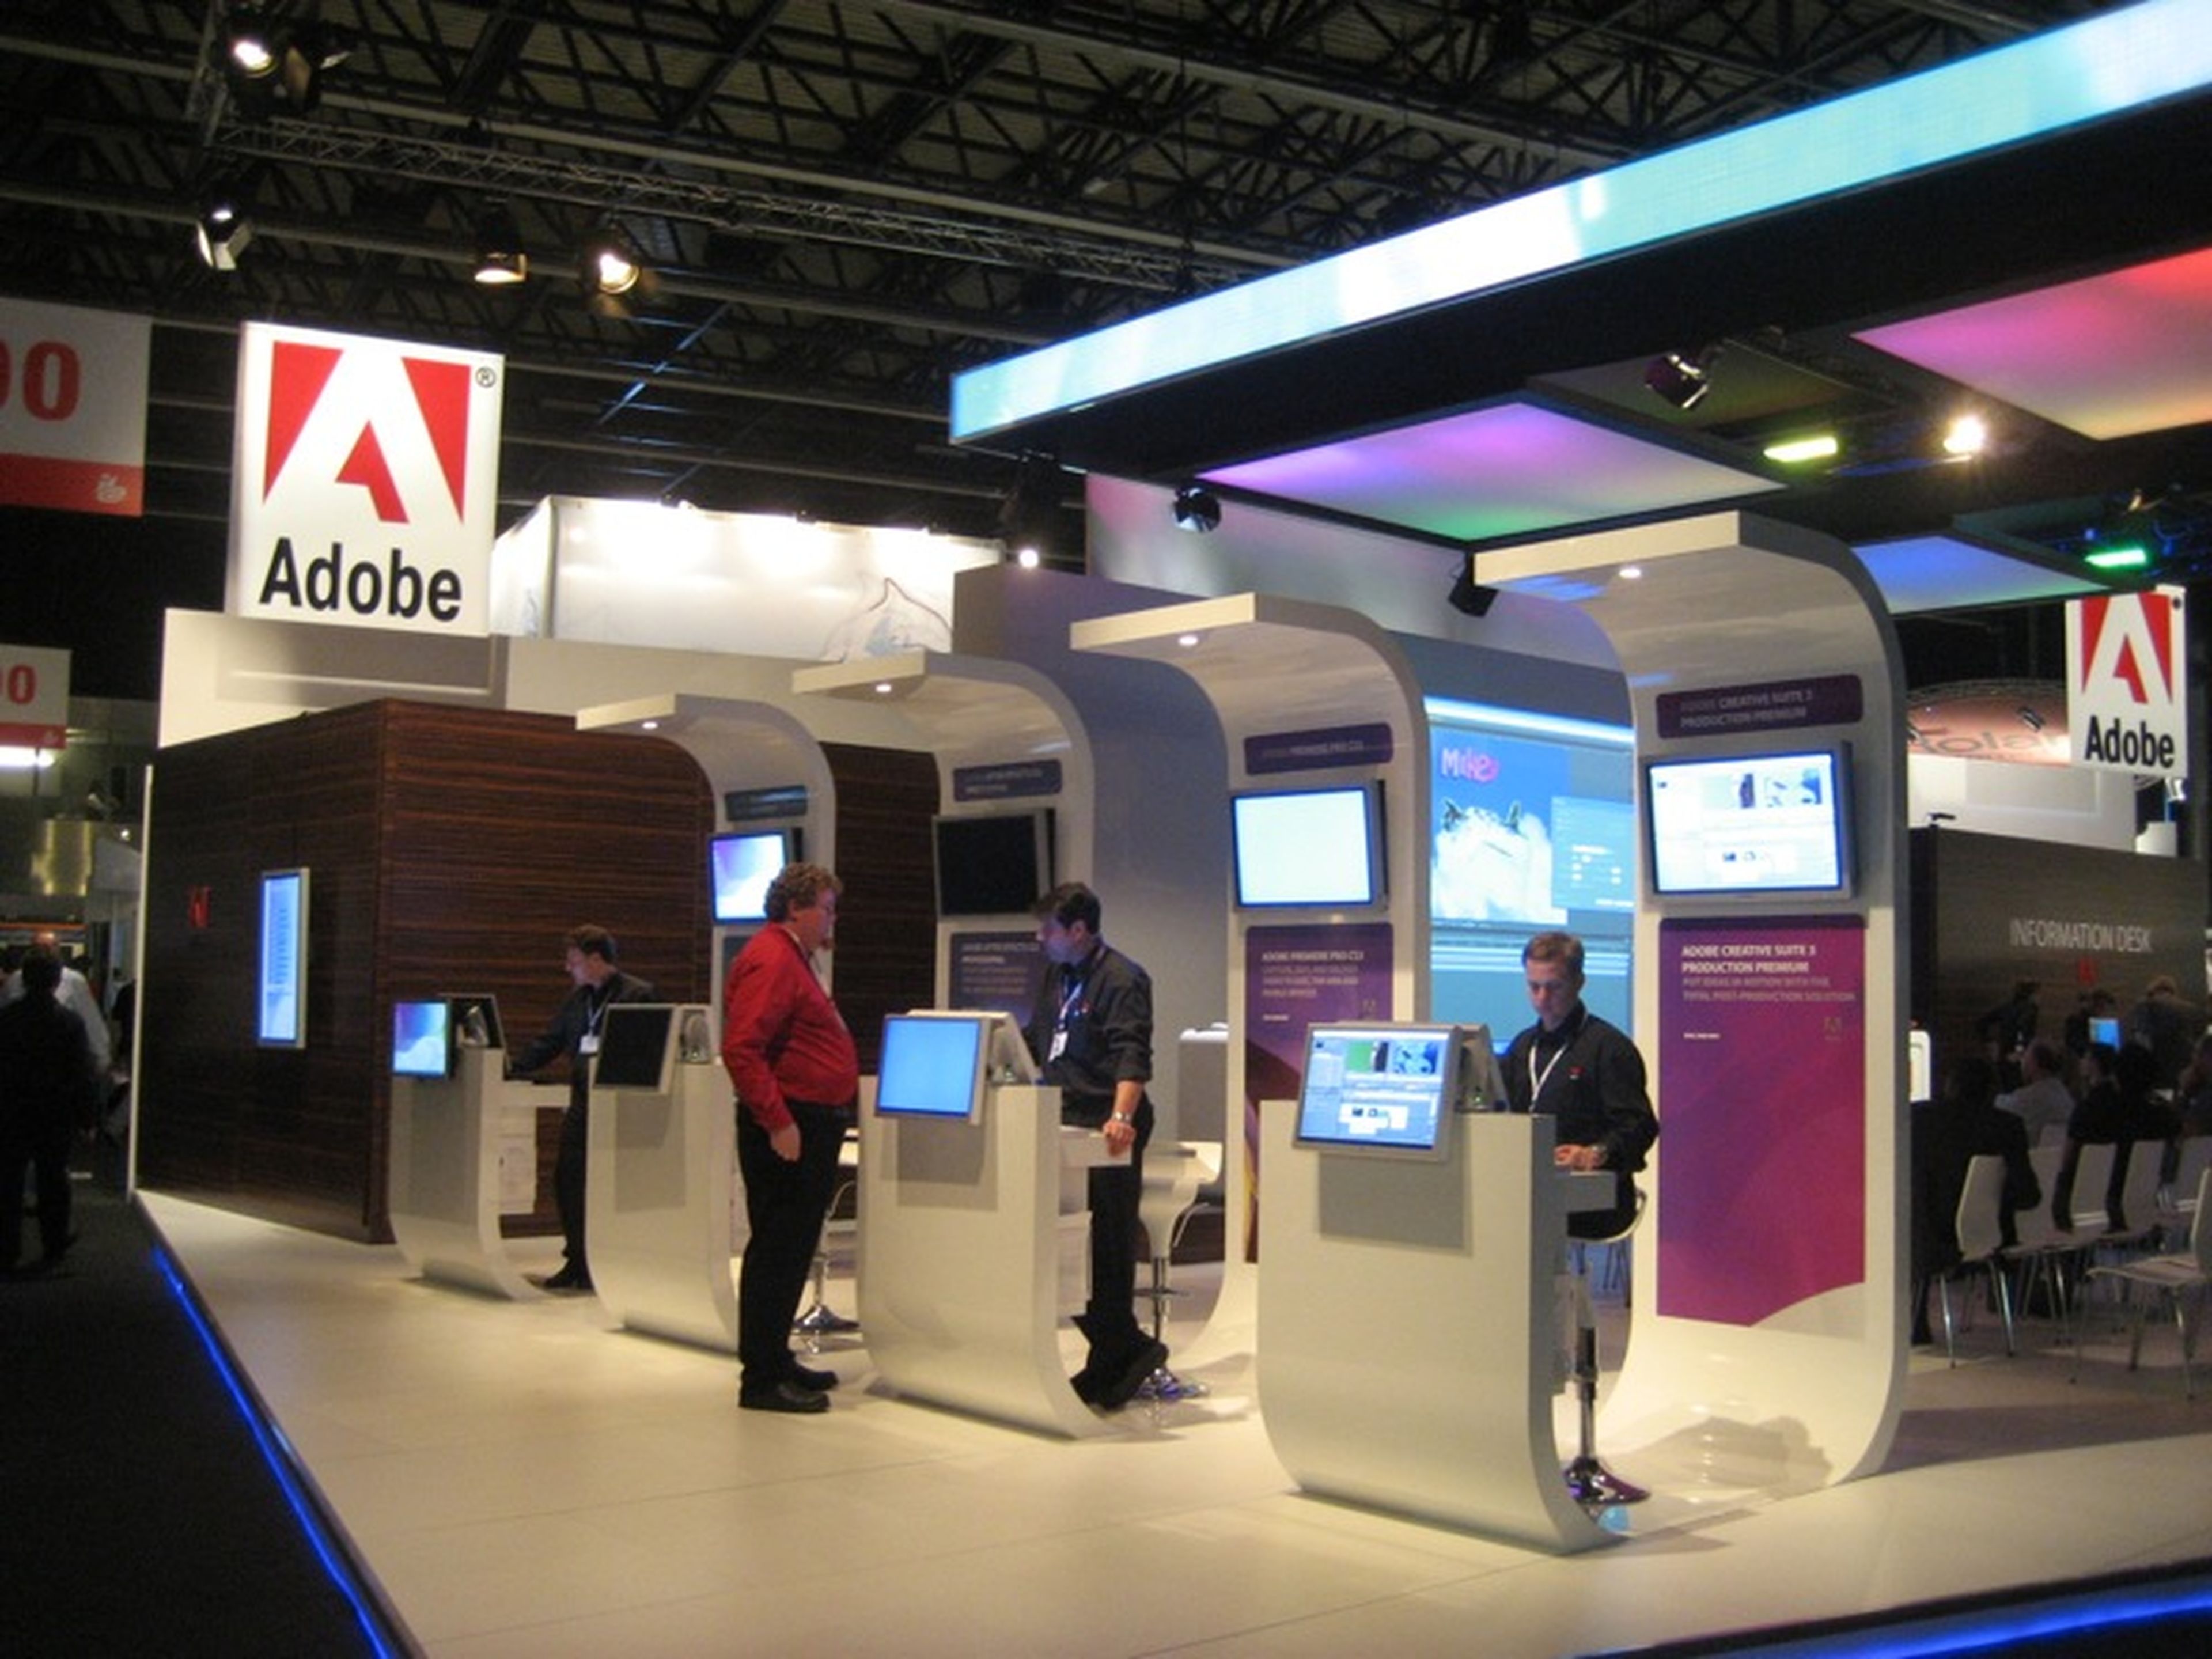 Adobe stand